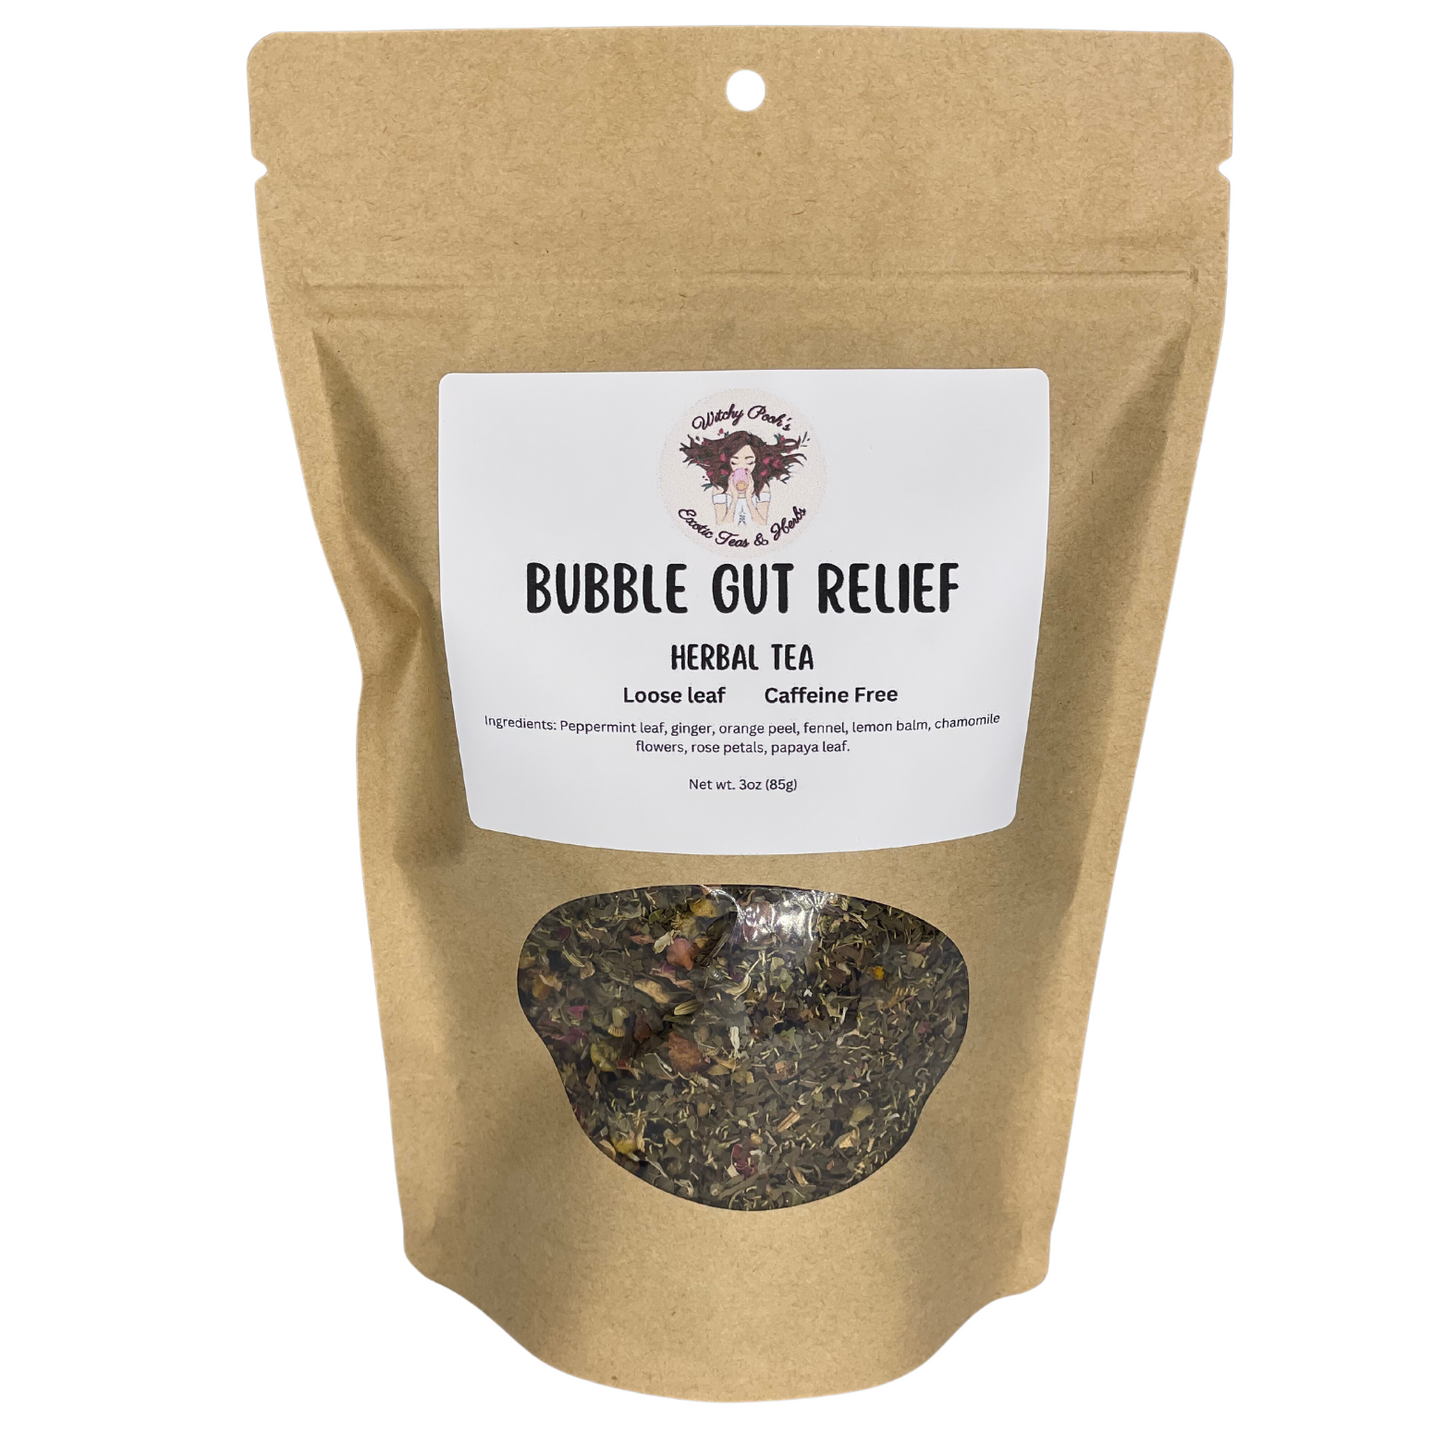 Bubble Gut Relief Herbal Loose Leaf Tea